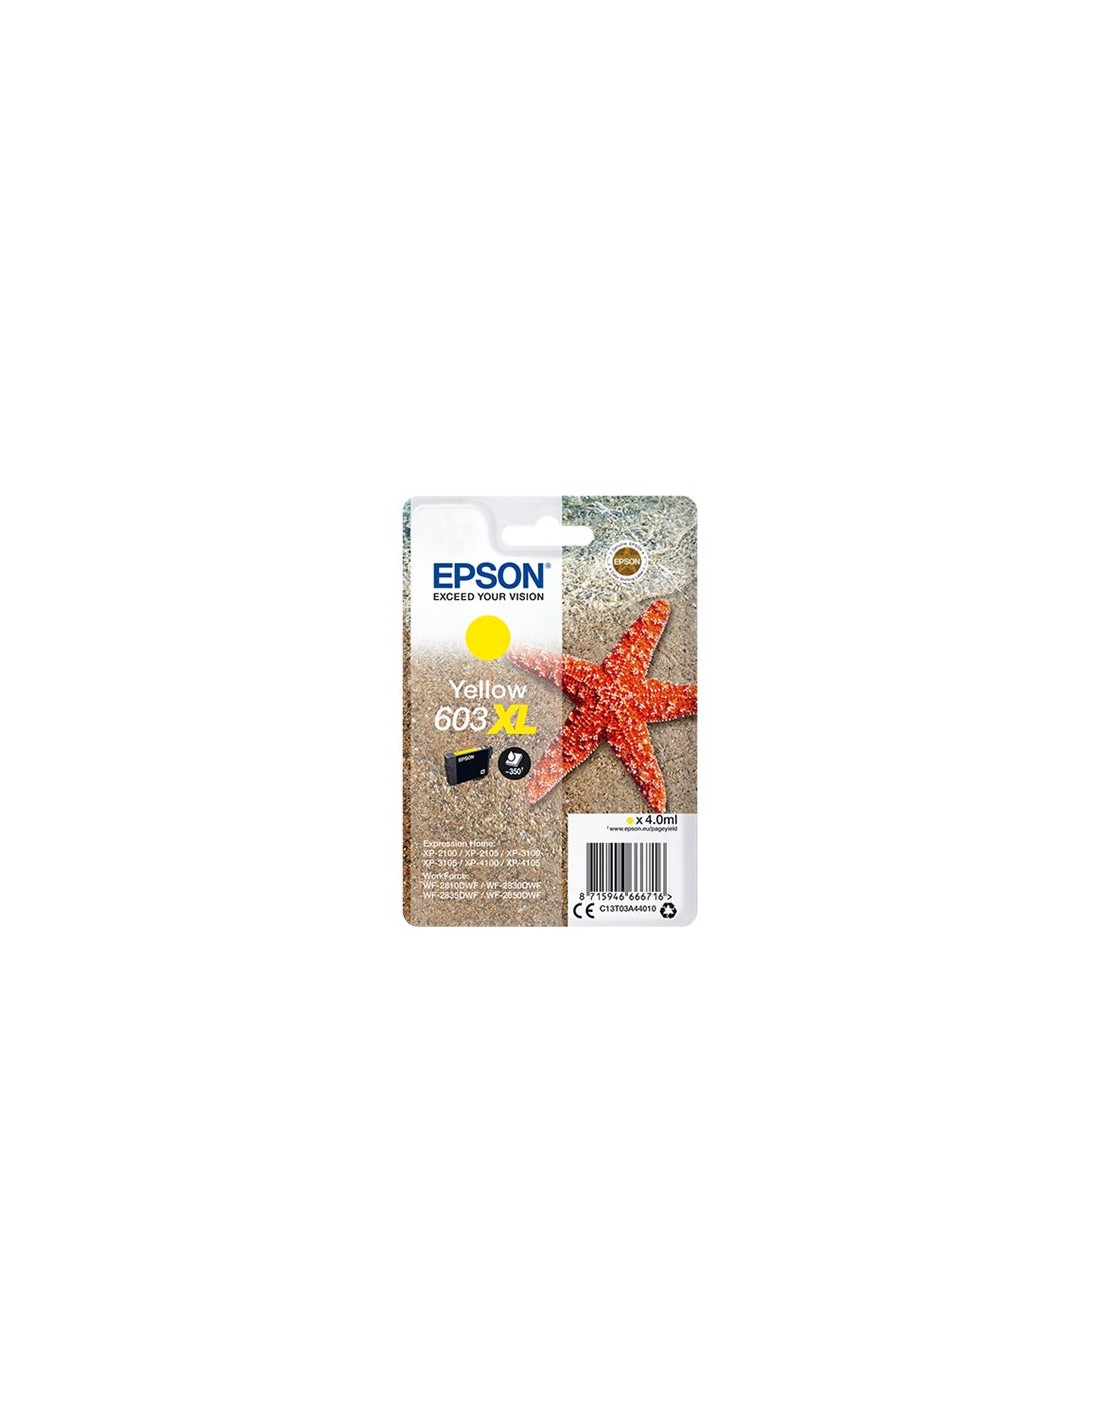 Epson 603XL - Étoile de mer - Jaune - Cartouche Epson - pas